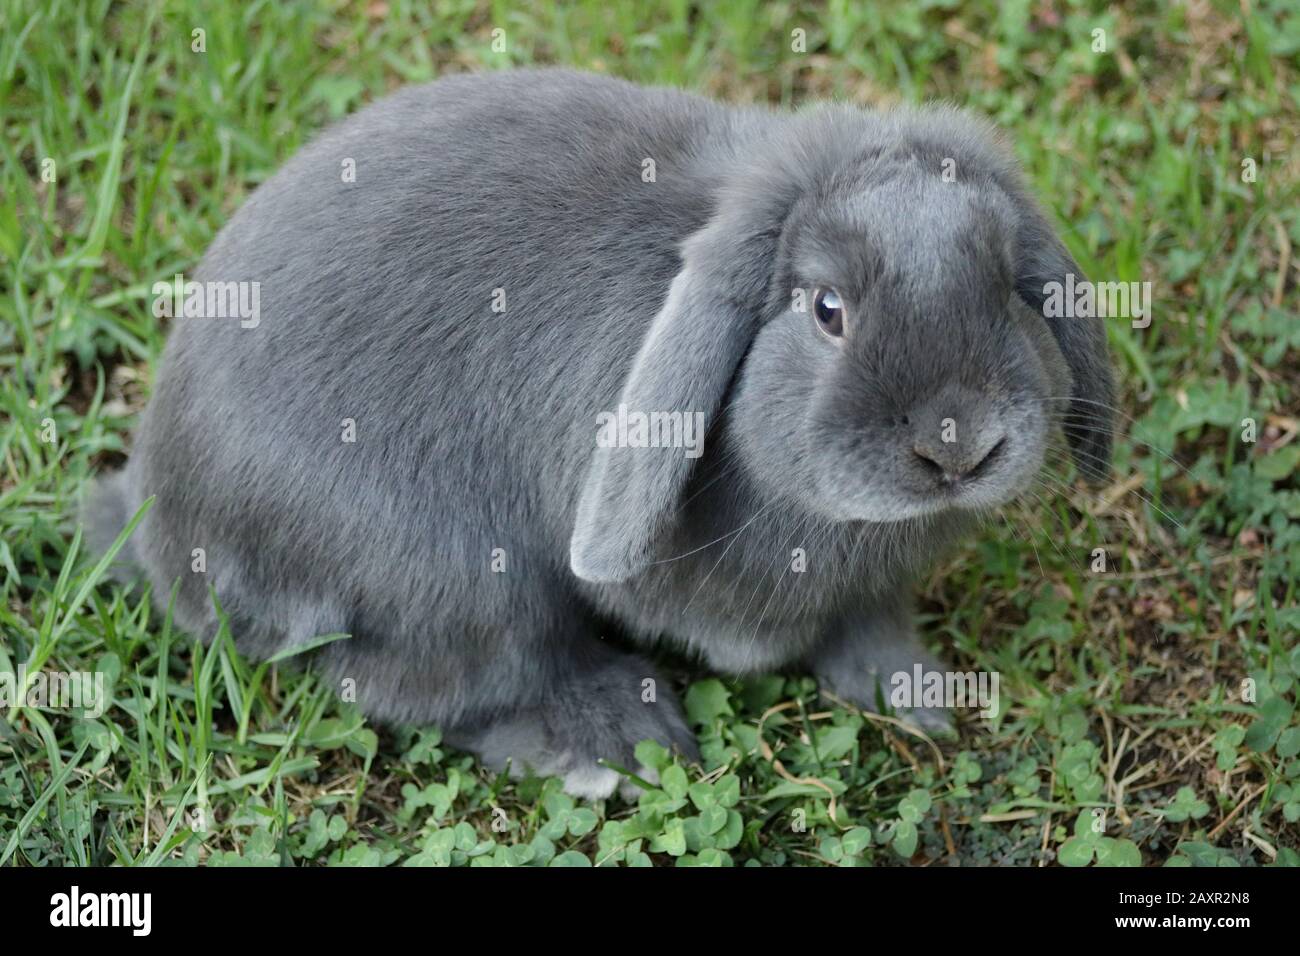 grey mini lop bunny